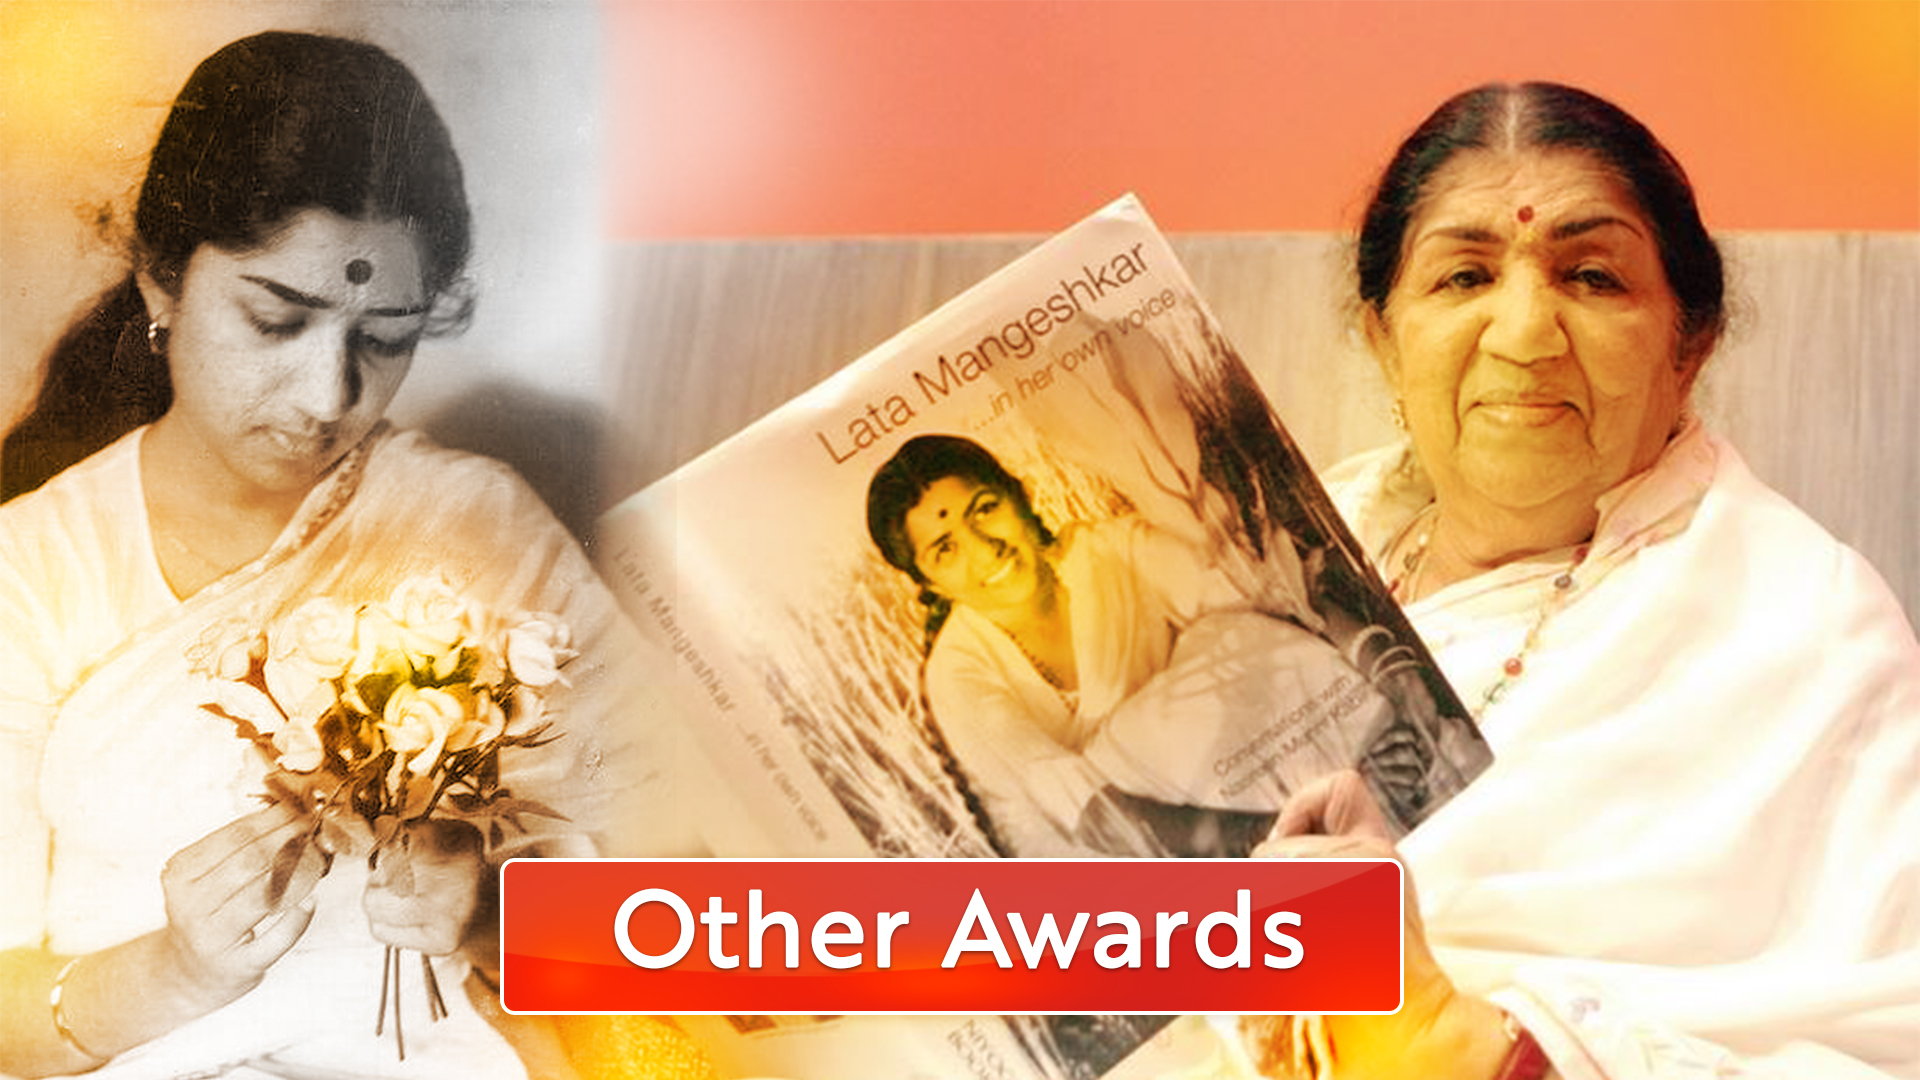 Awards and honours bestowed upon Lata Mangeshkar